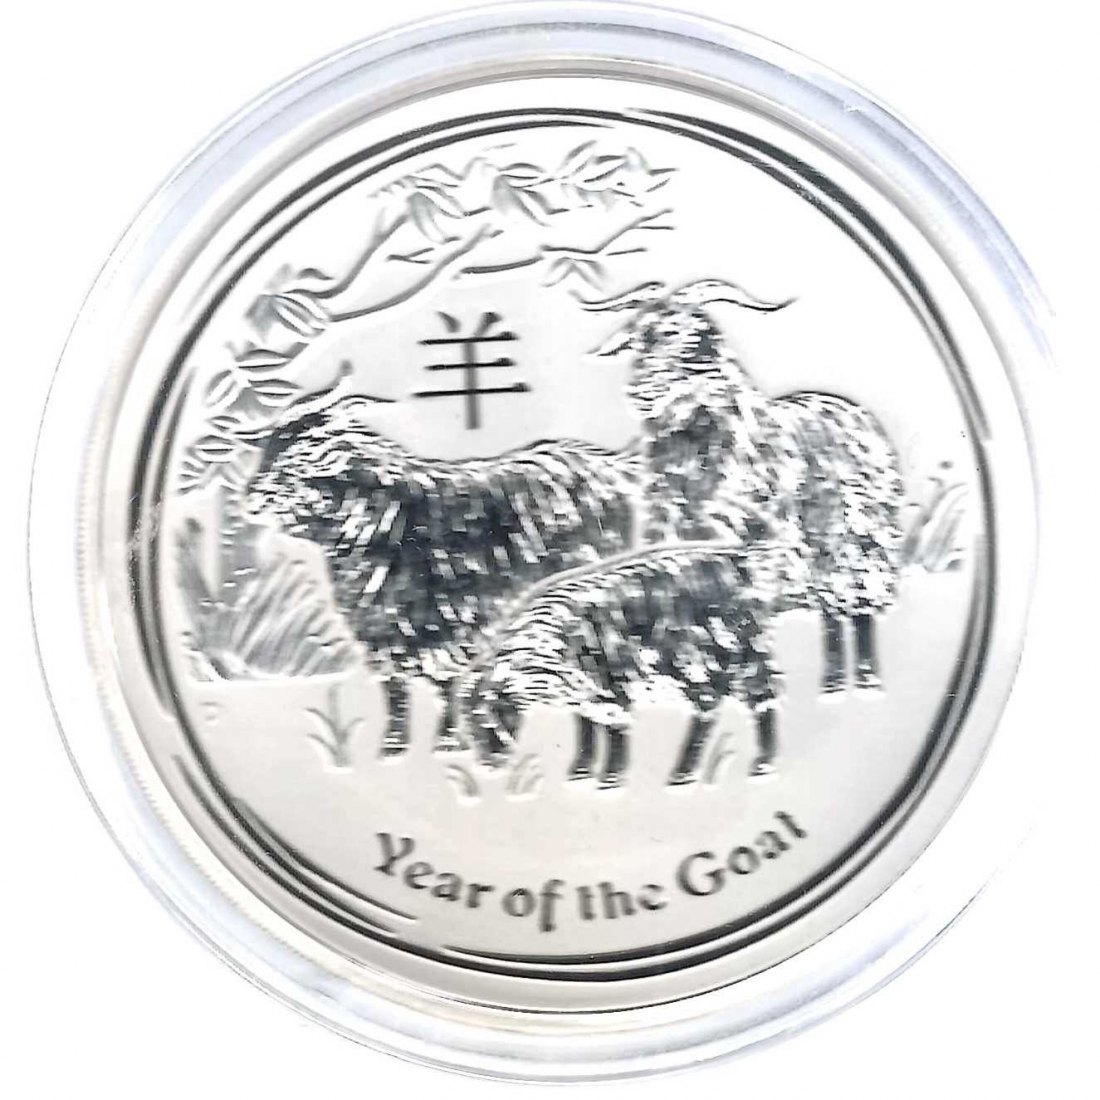  Australien 30 Dollar Year of the Goat 2015 ST 1 Kilo Silber Münzenankauf Koblenz Frank Maurer AB 400   